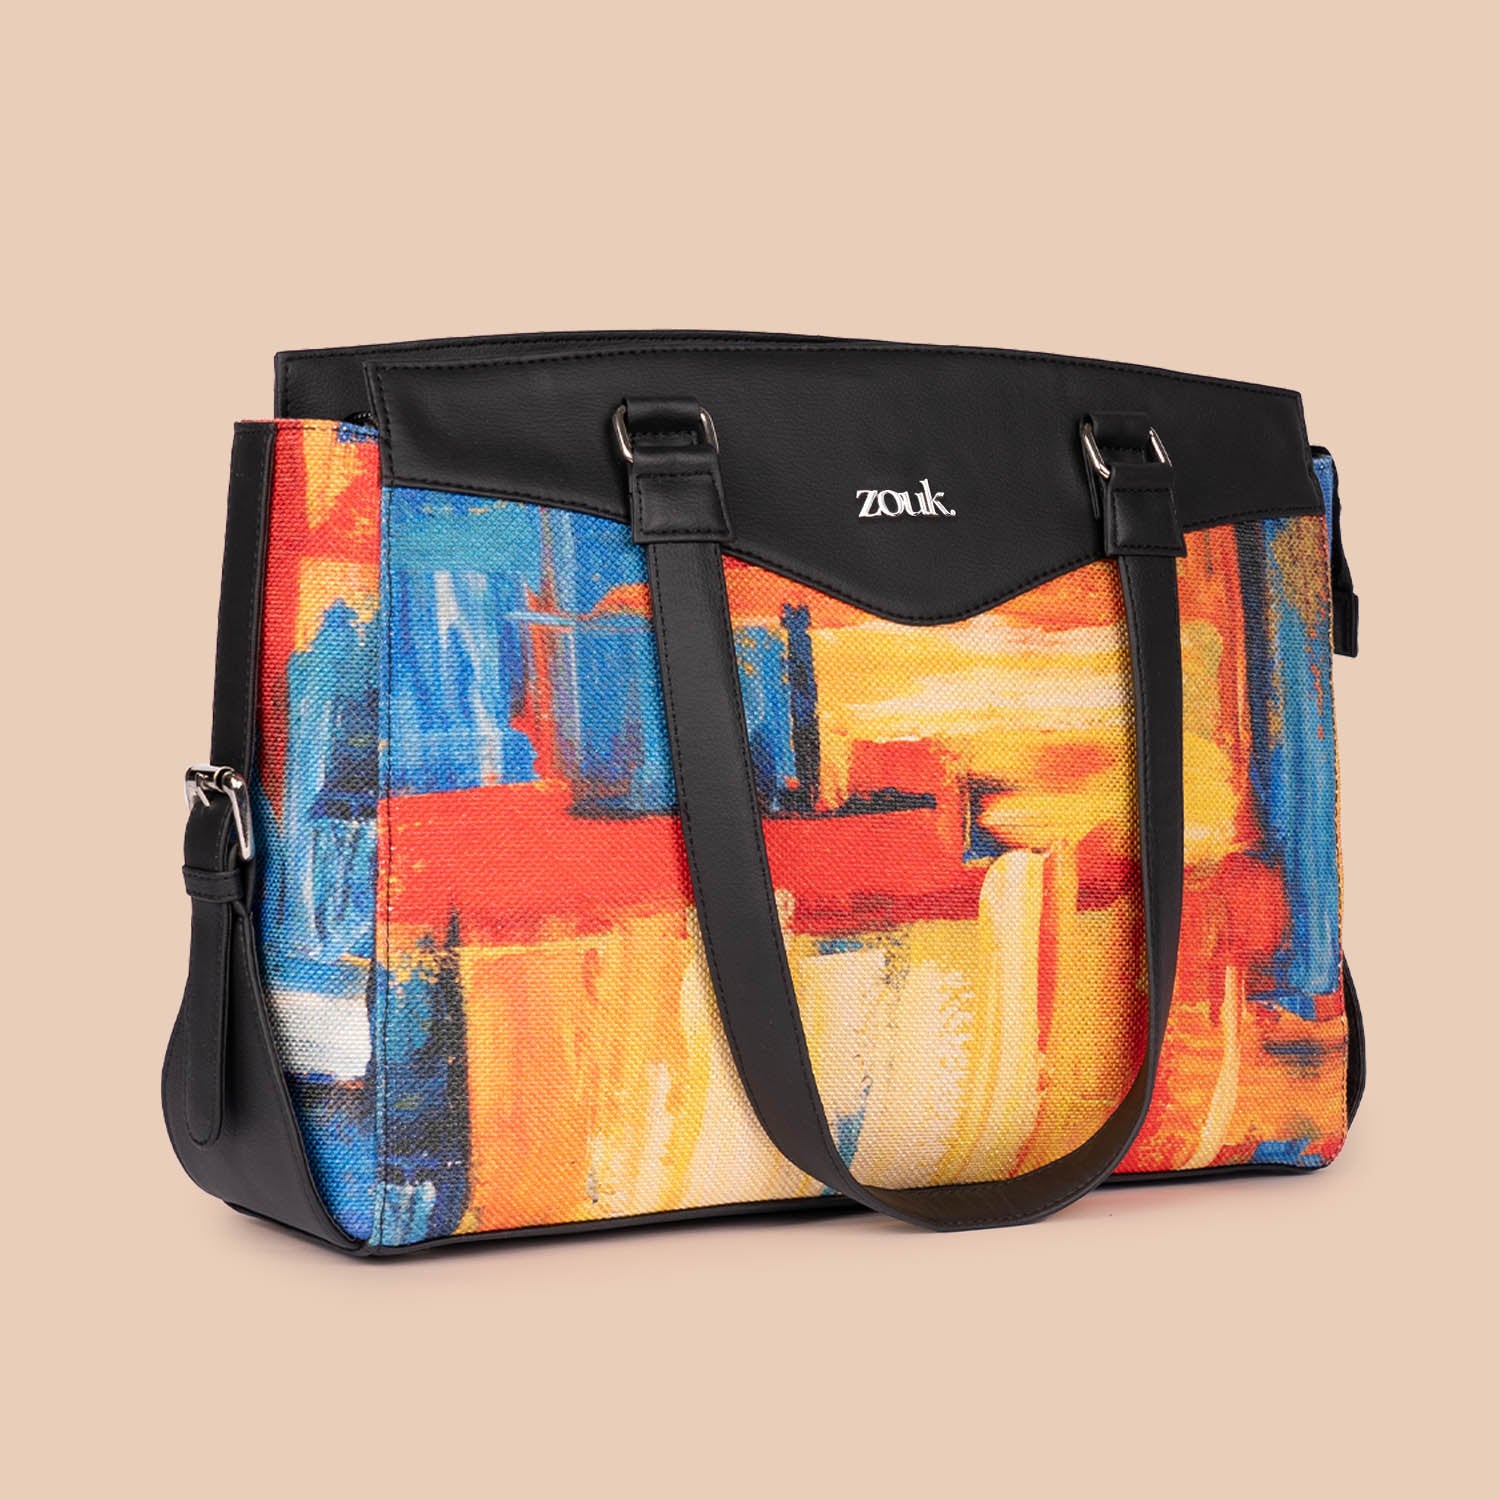 Abstract Amaze Women's Work Bag